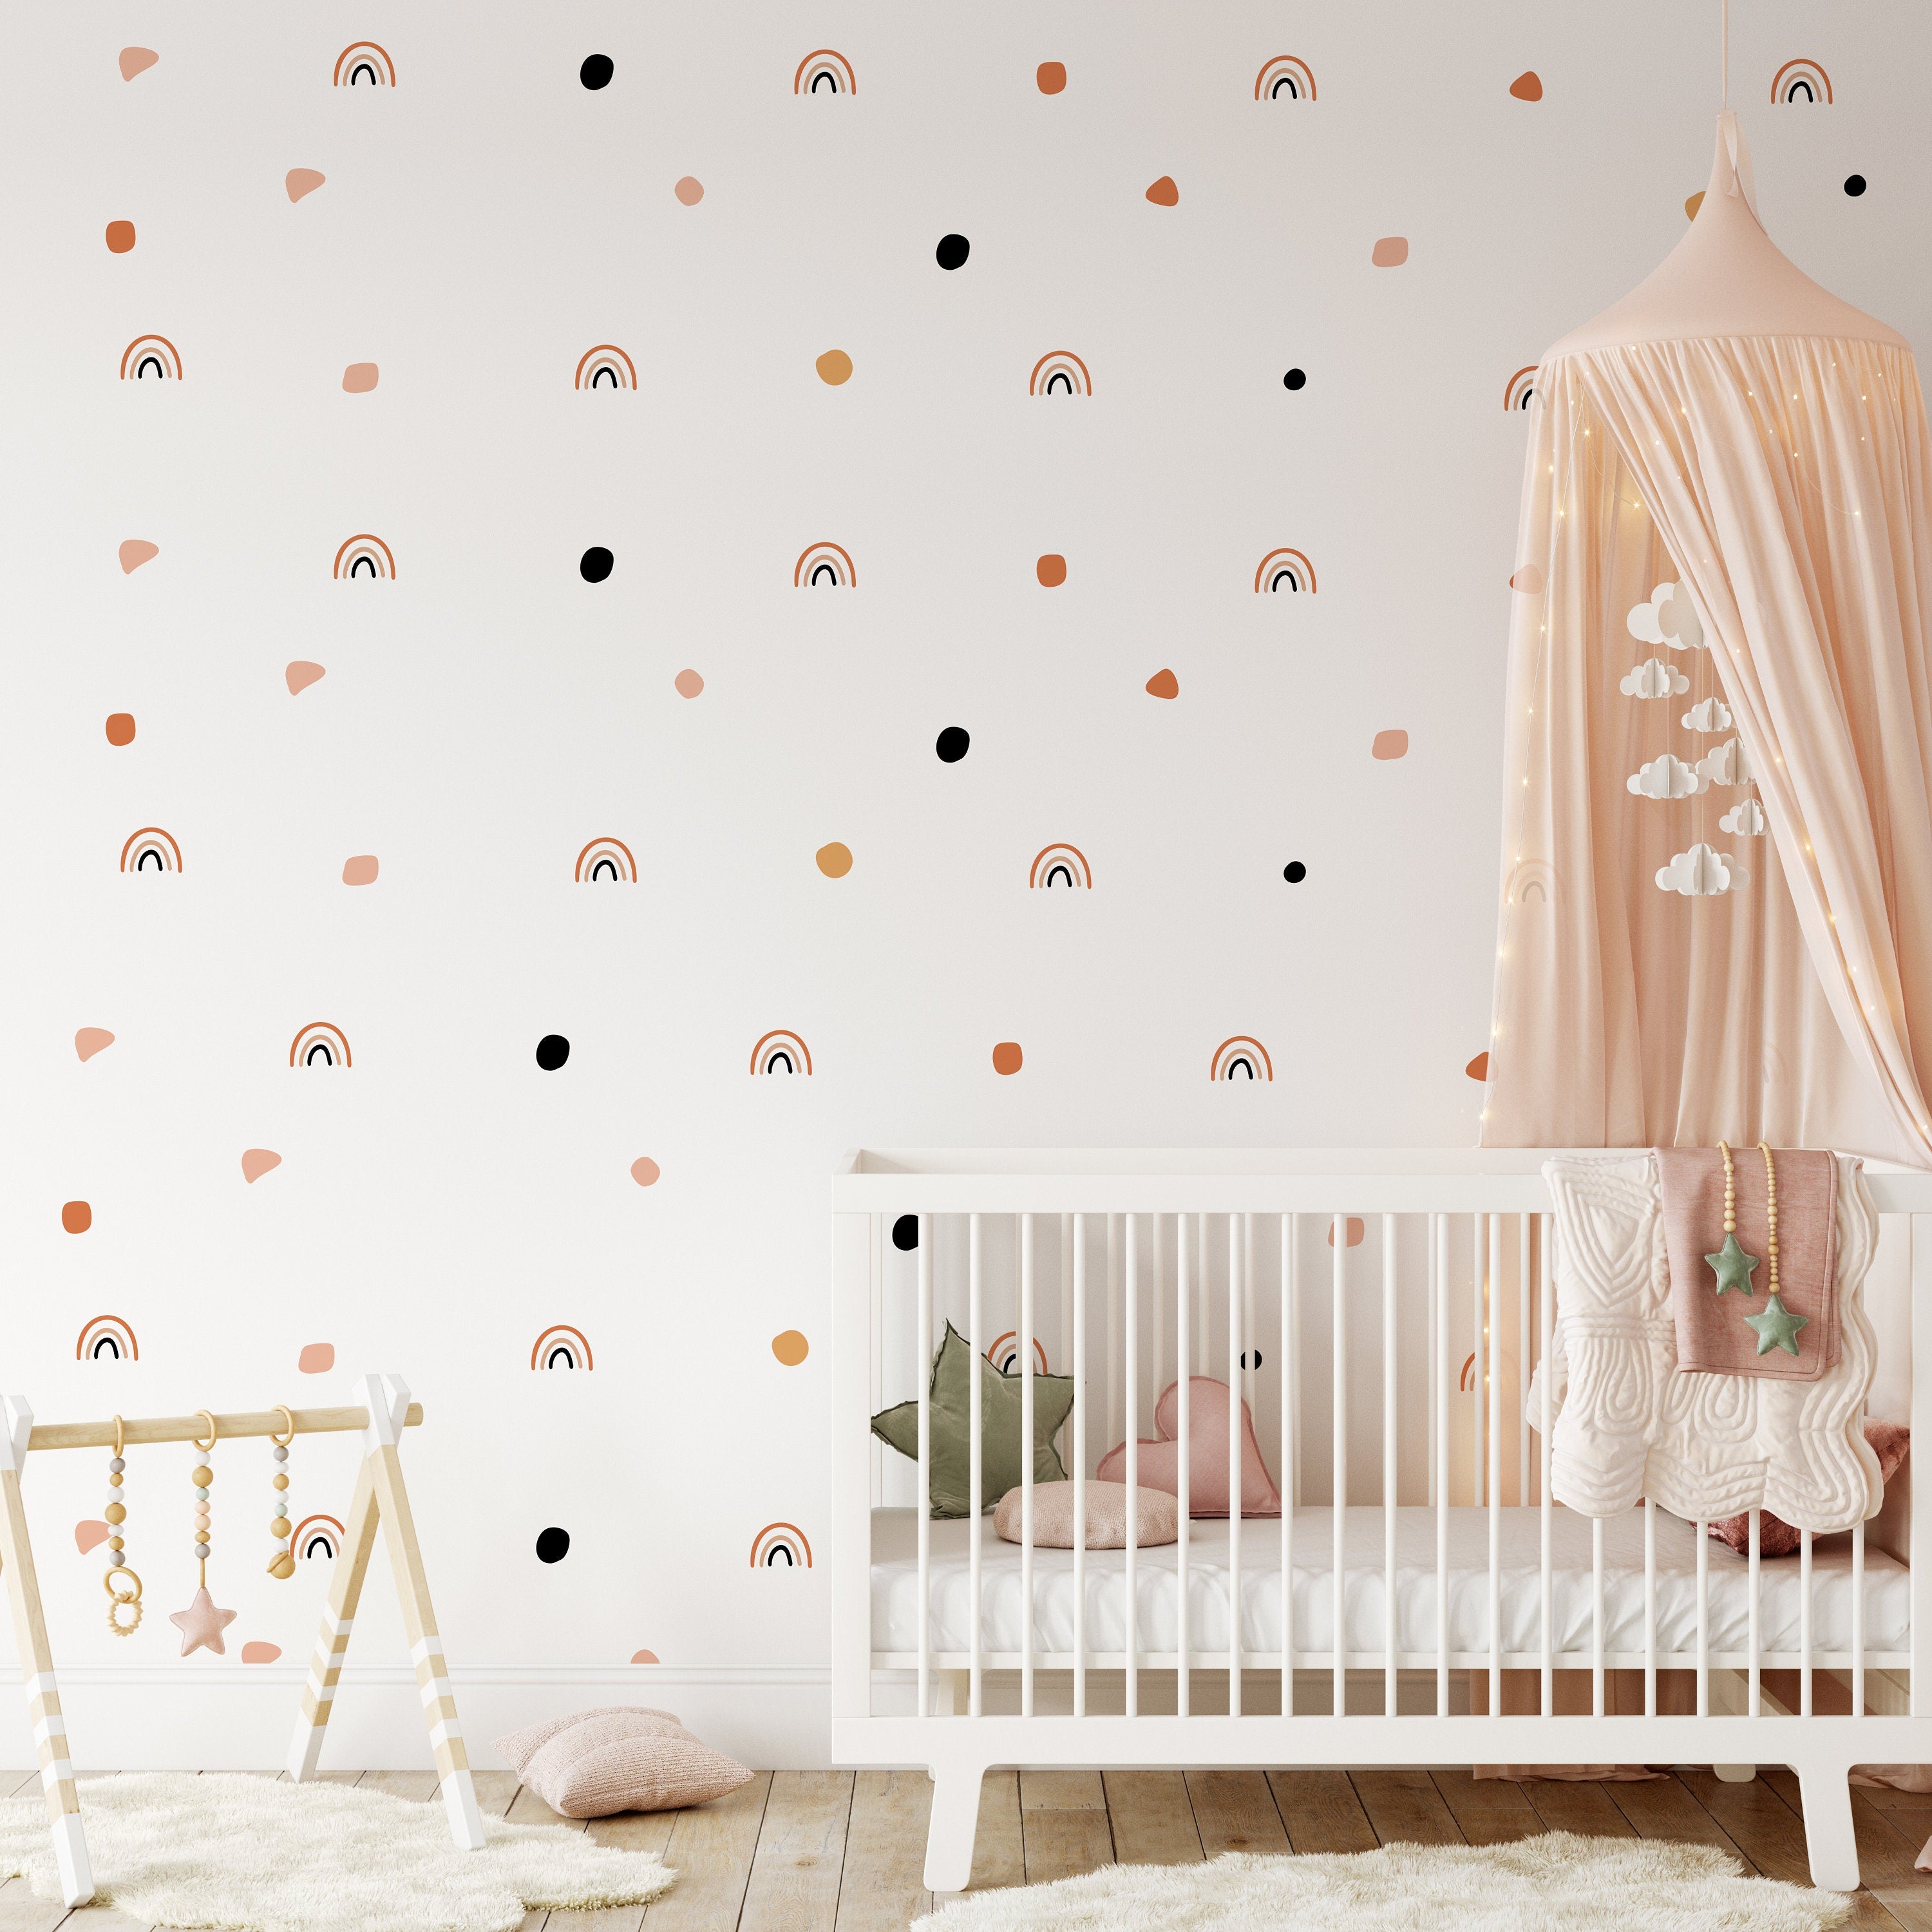 Rainbow Wall Stickers Boho irregular Polka Dot Wall Decals Chic Wall Decor Kids Nursery Babies Room Vinyl